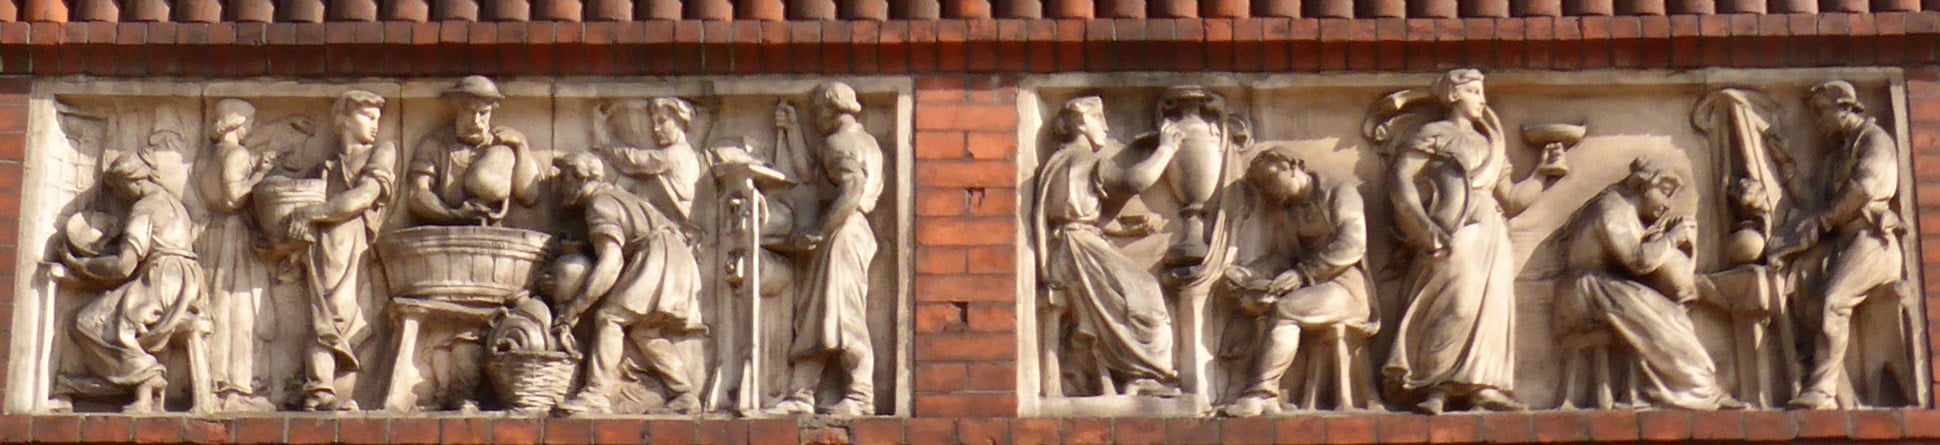 Detail from the exterior of the Wedgwood Institute in Burslem, Stoke-on-Trent